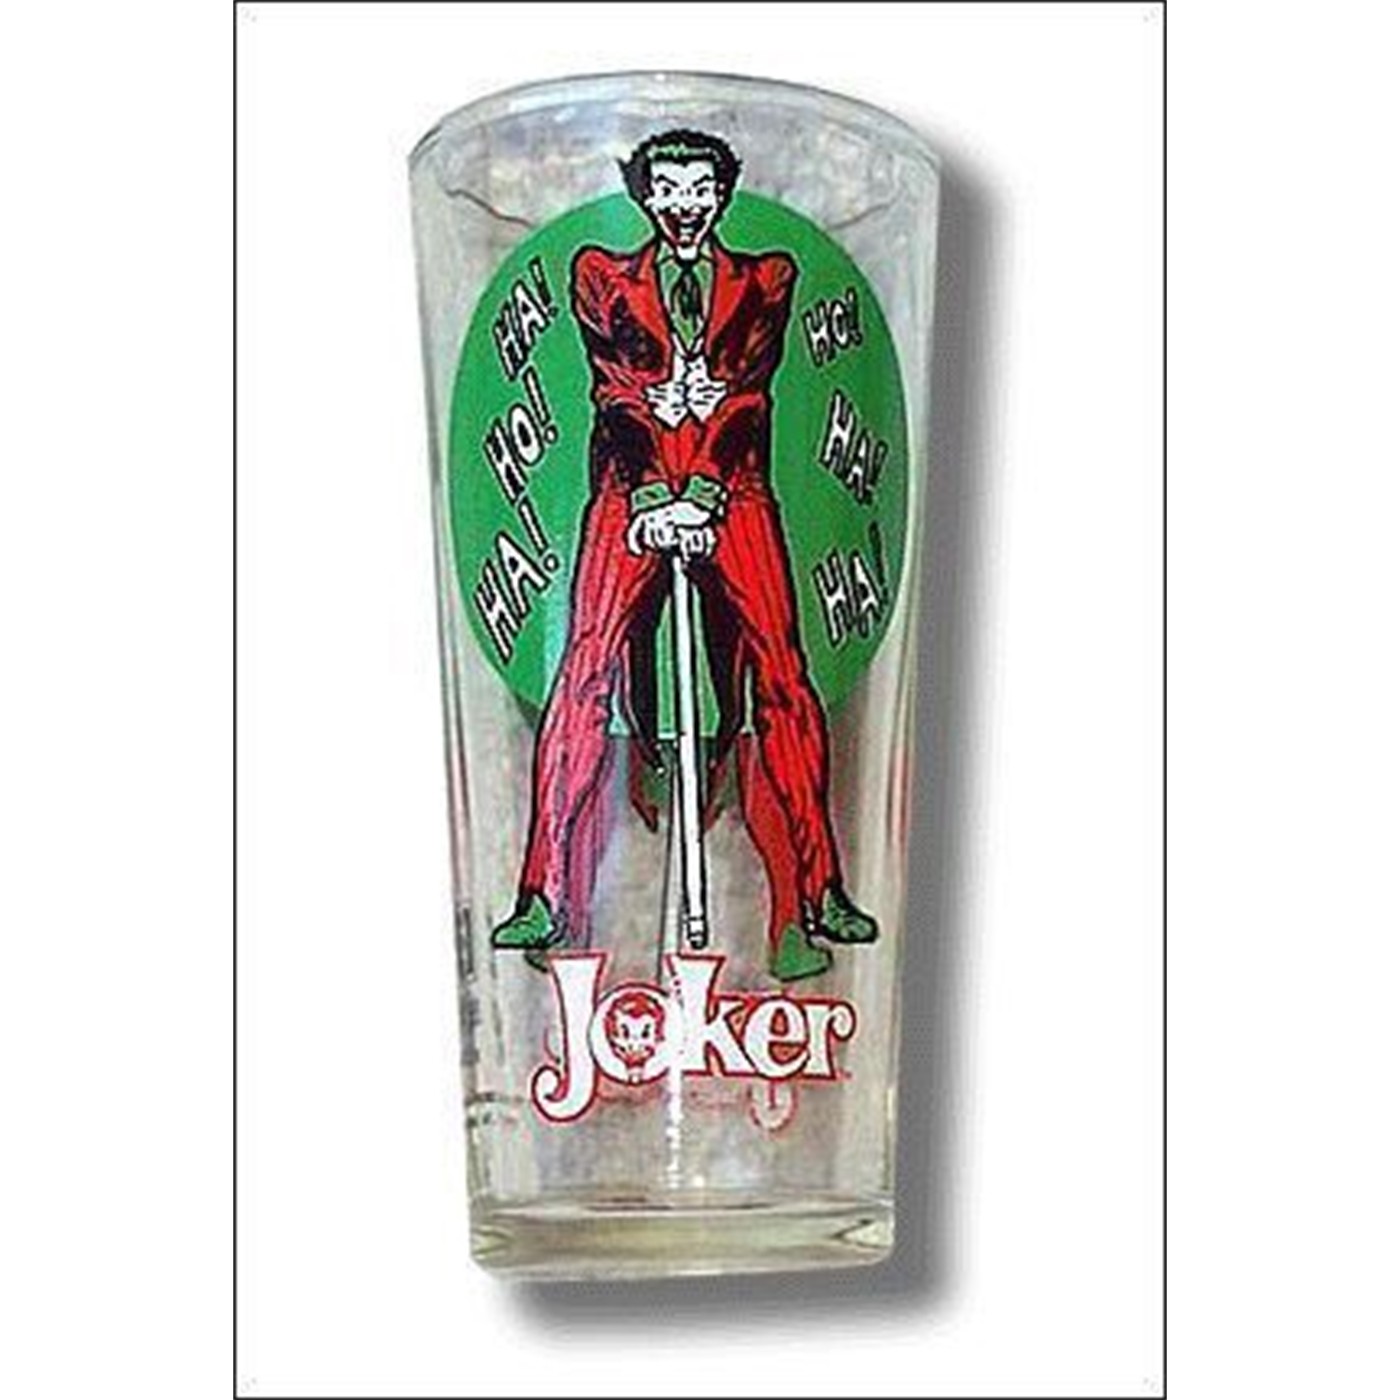 Joker Pepsi Moon Glass